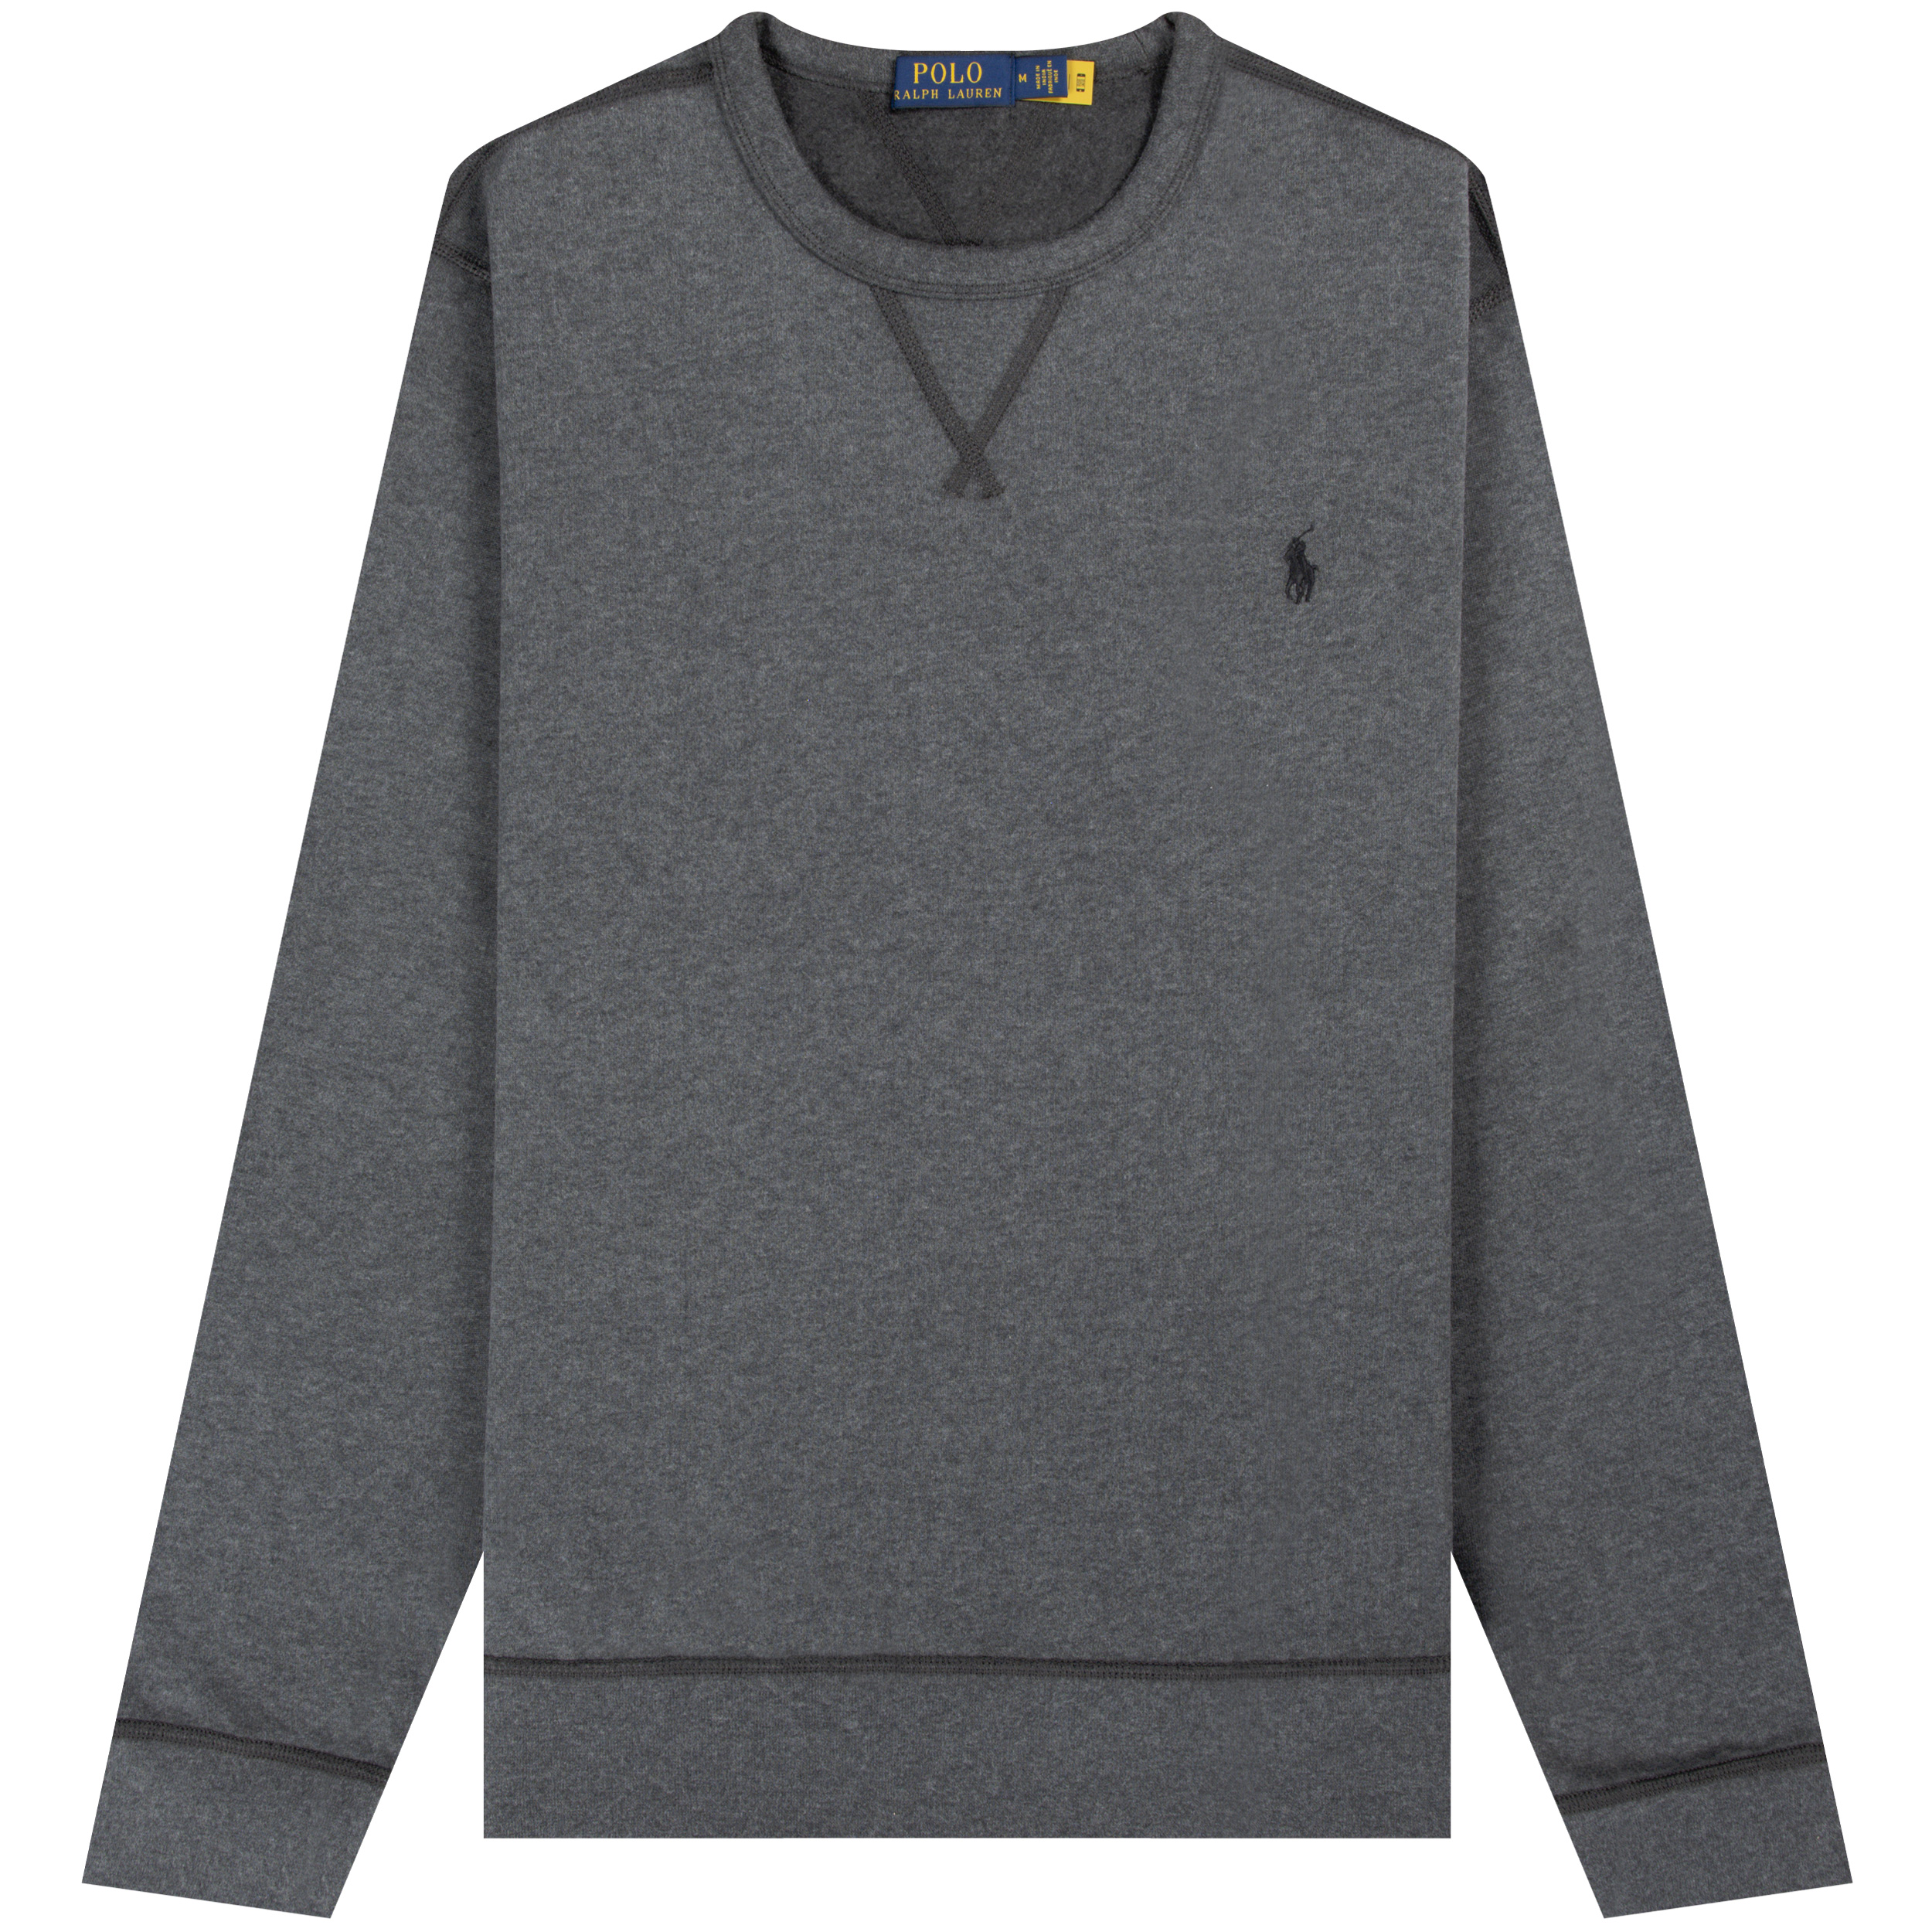 Polo Ralph Lauren ’Classic’ Crewneck Sweatshirt Heather Grey